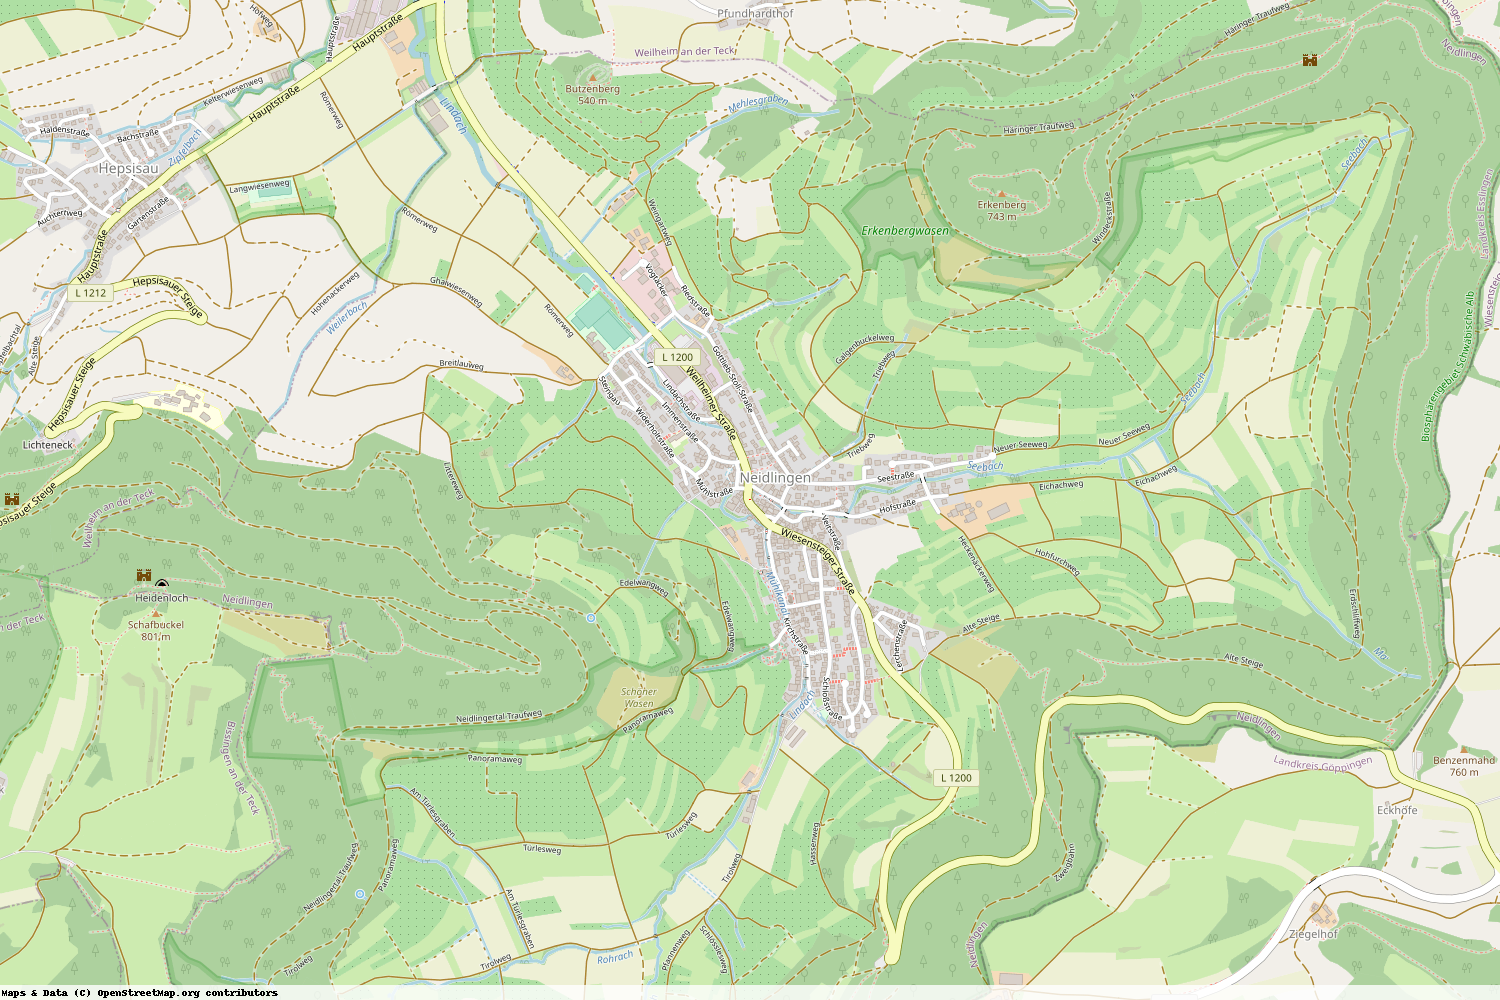 Ist gerade Stromausfall in Baden-Württemberg - Esslingen - Neidlingen?